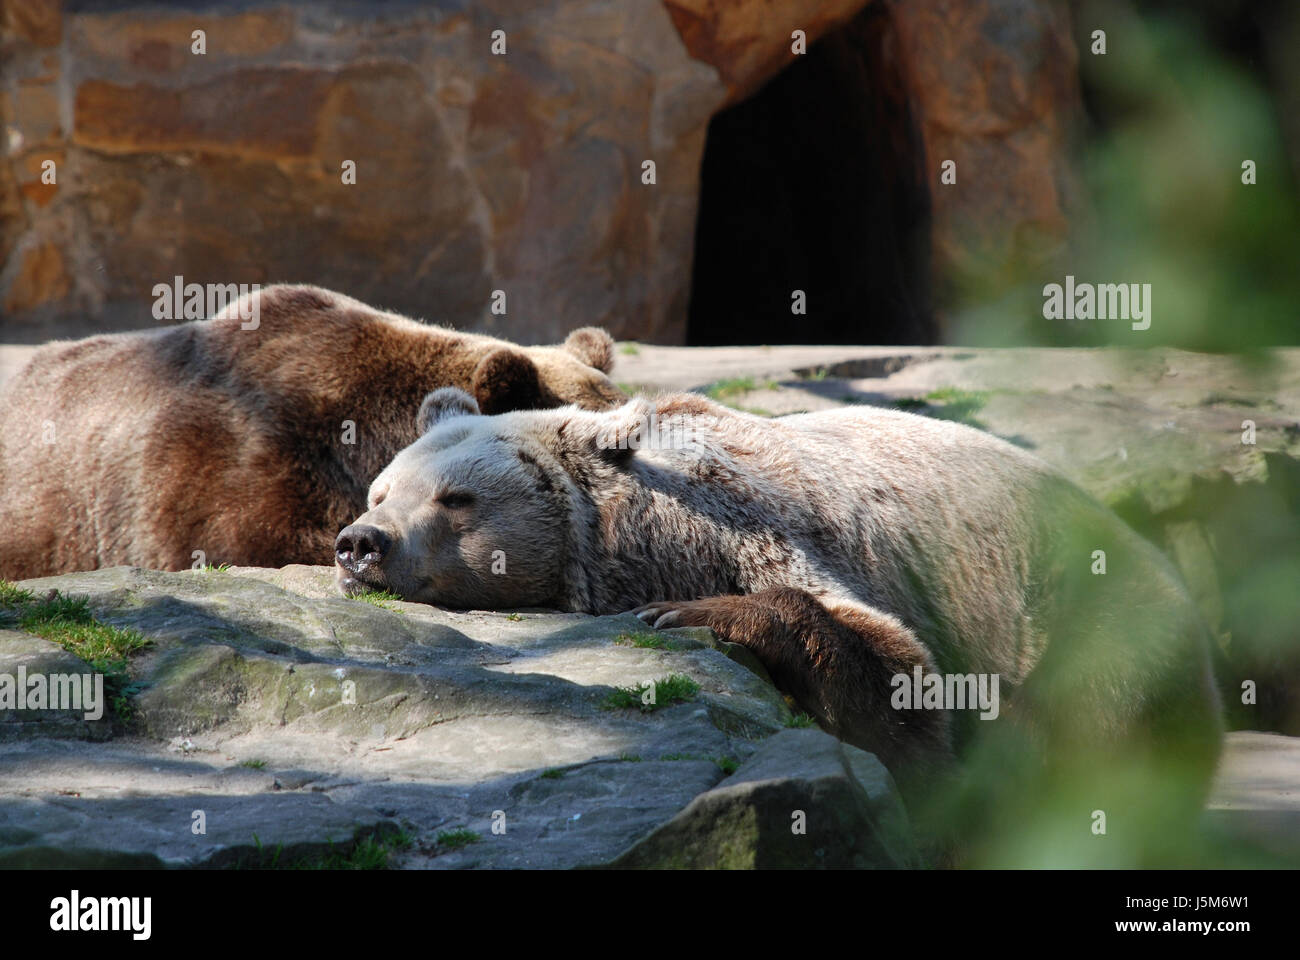 snug,bear,zoo,duo,sleep,sleeping,peaceful,peace,siesta,couple,pair,braunbr Stock Photo -